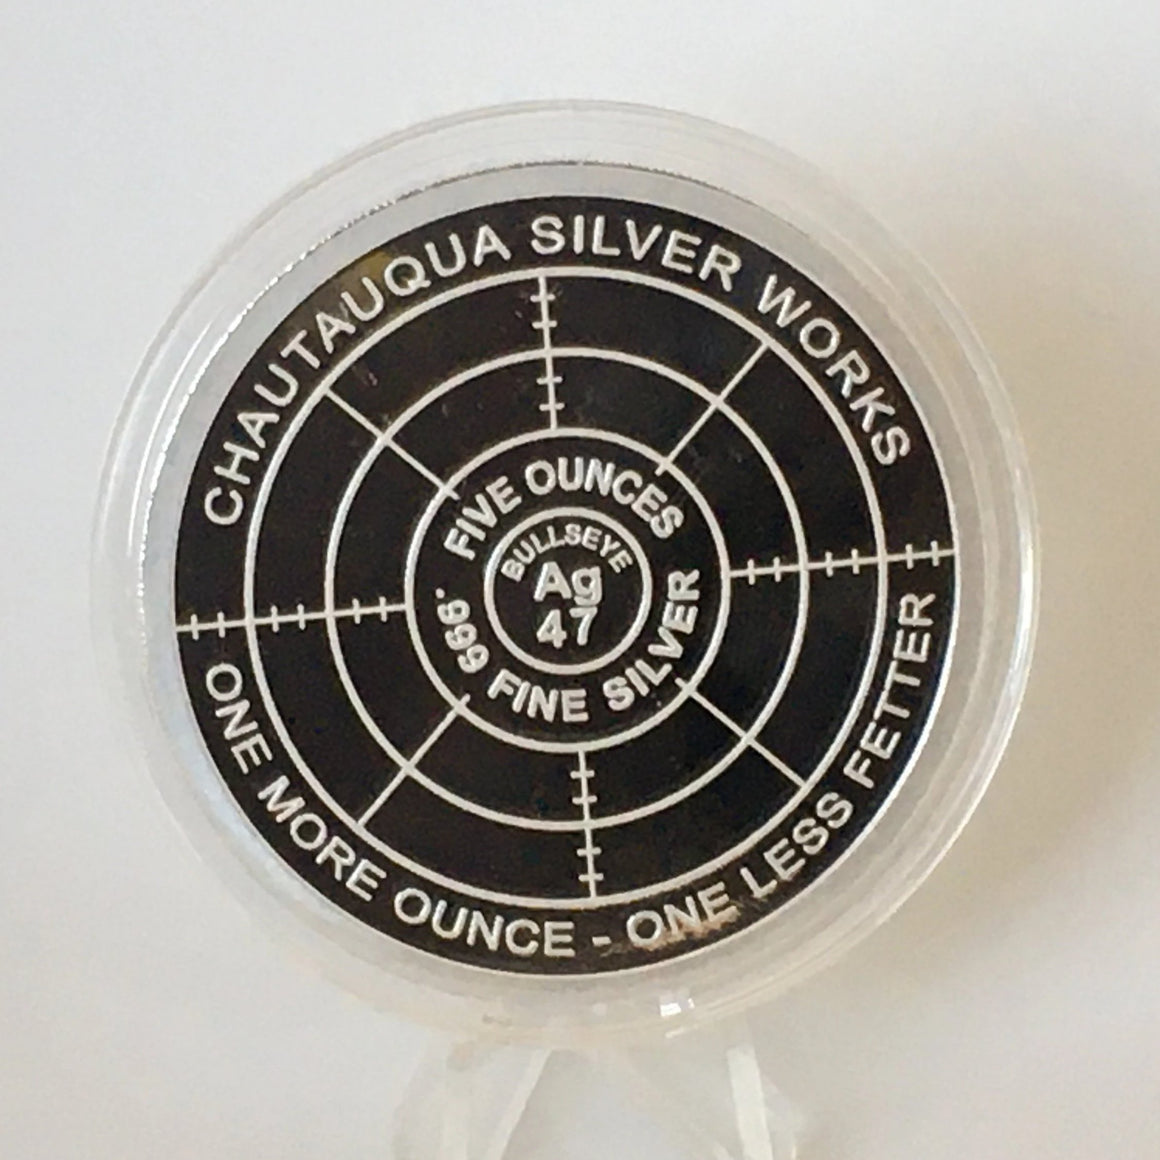 5oz Shifting Gears by Chautauqua Silver Works, .999 Fine Silver Round